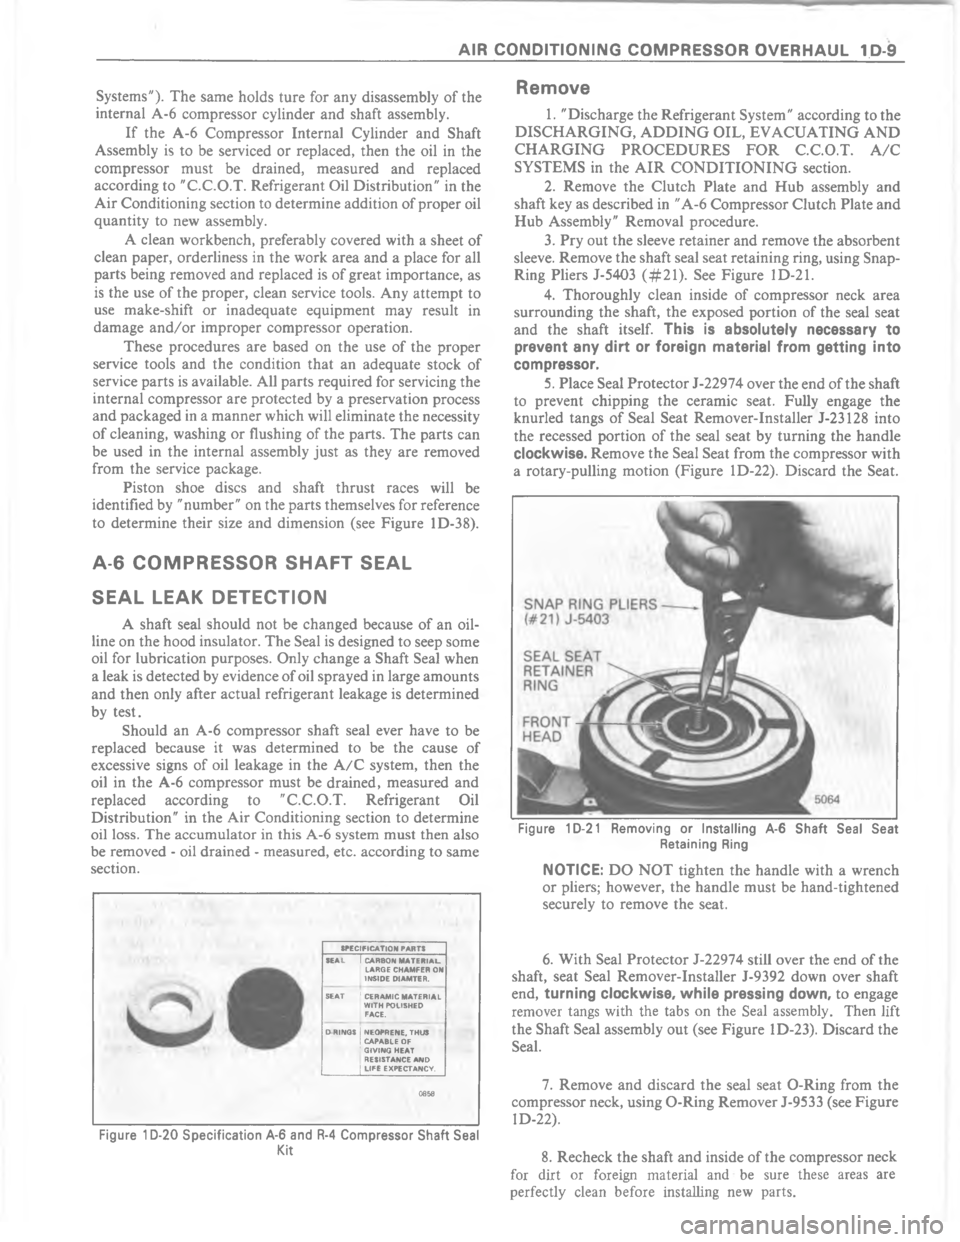 CHEVROLET LIGHT DUTY TRUCK 1980  Repair Everhaul Manual Downloaded from www.Manualslib.com manuals search engine  	   9  E @                 	        
	

&
